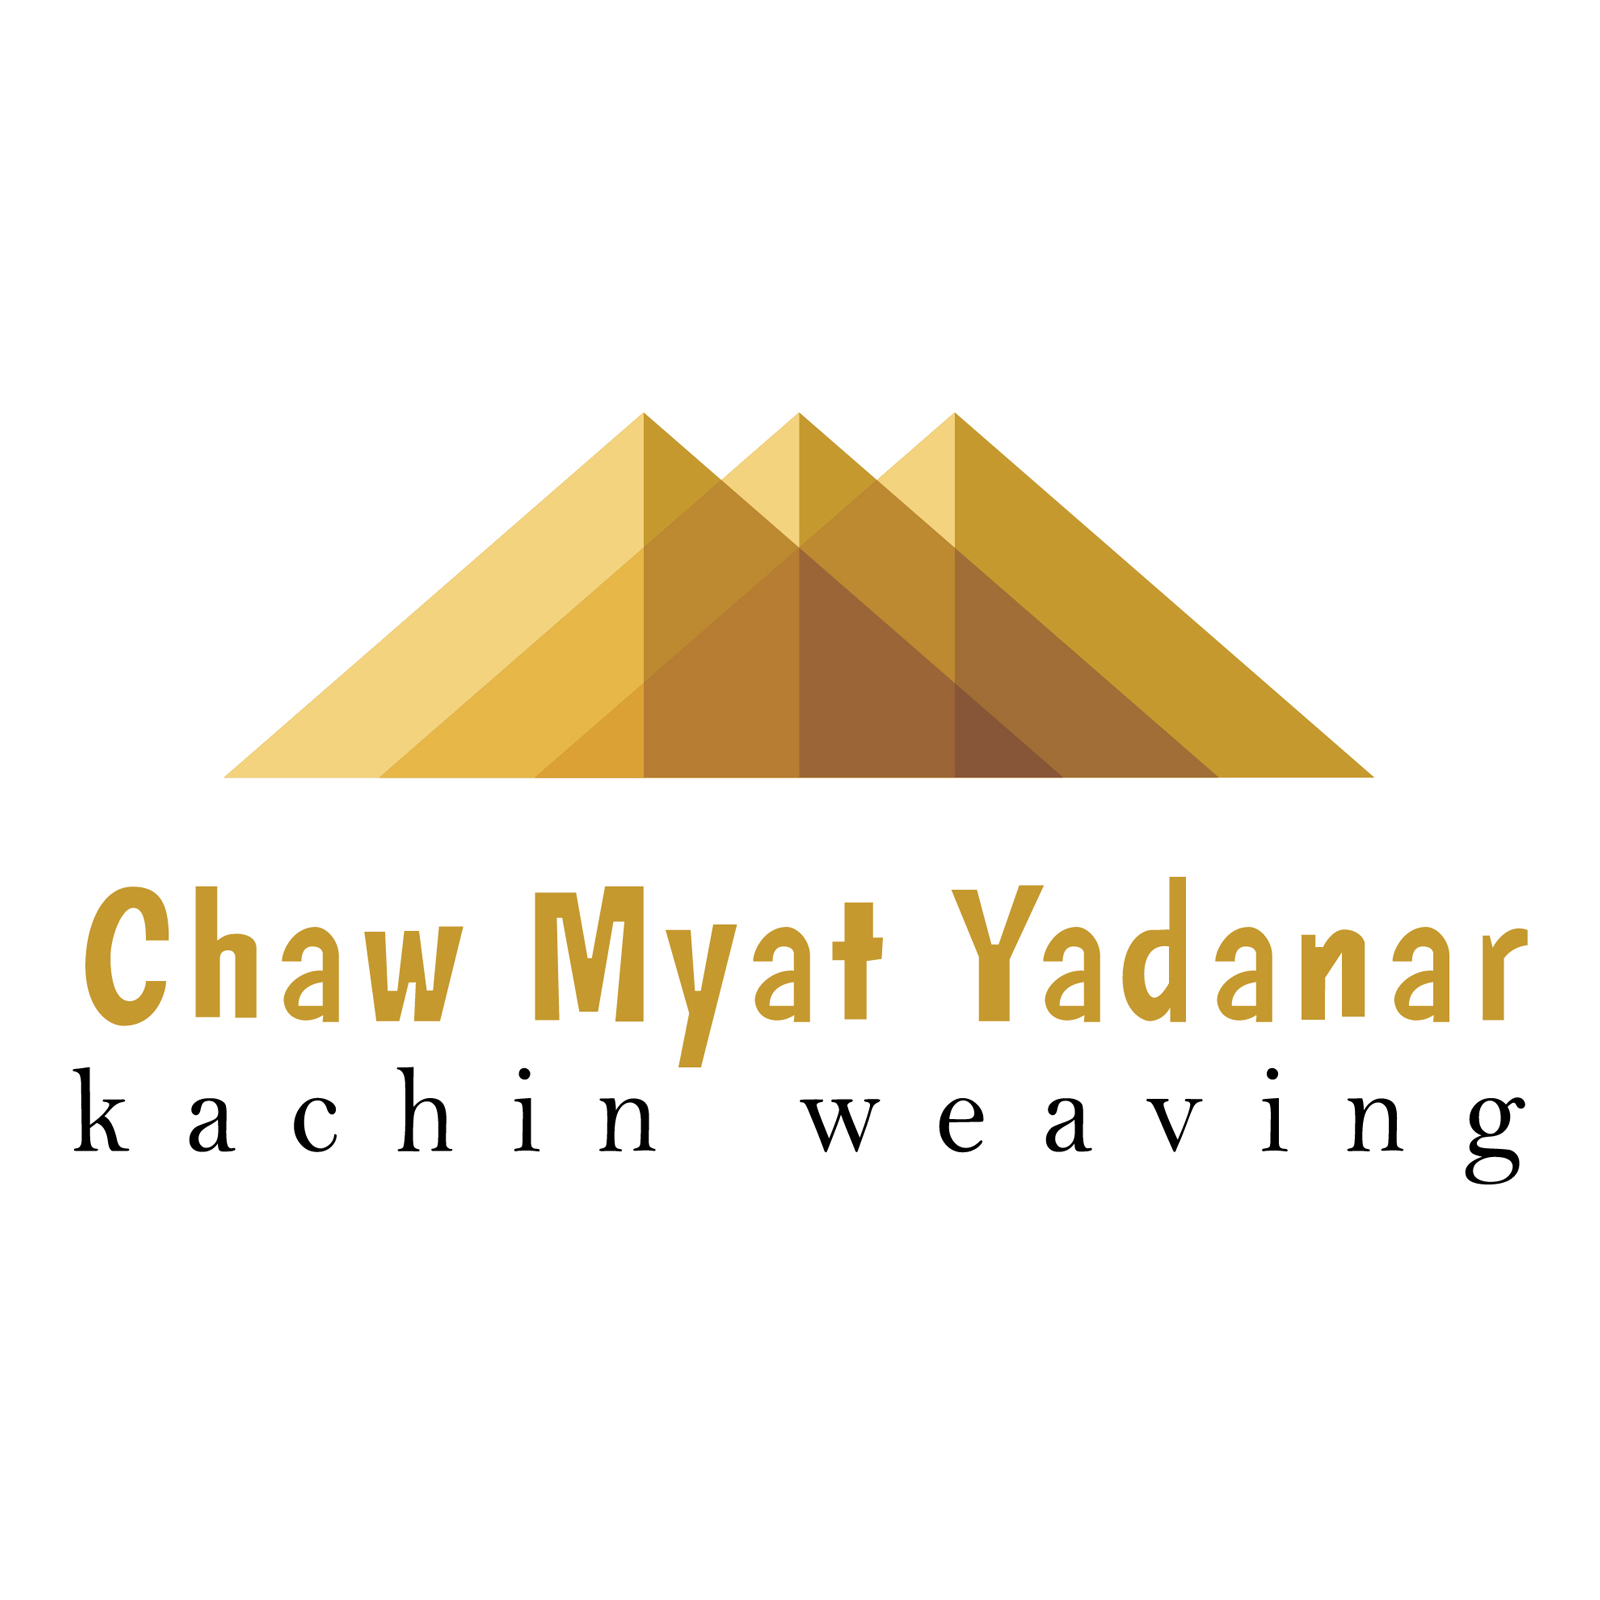 Chaw Myat Yadanar (Kachin Weaving)